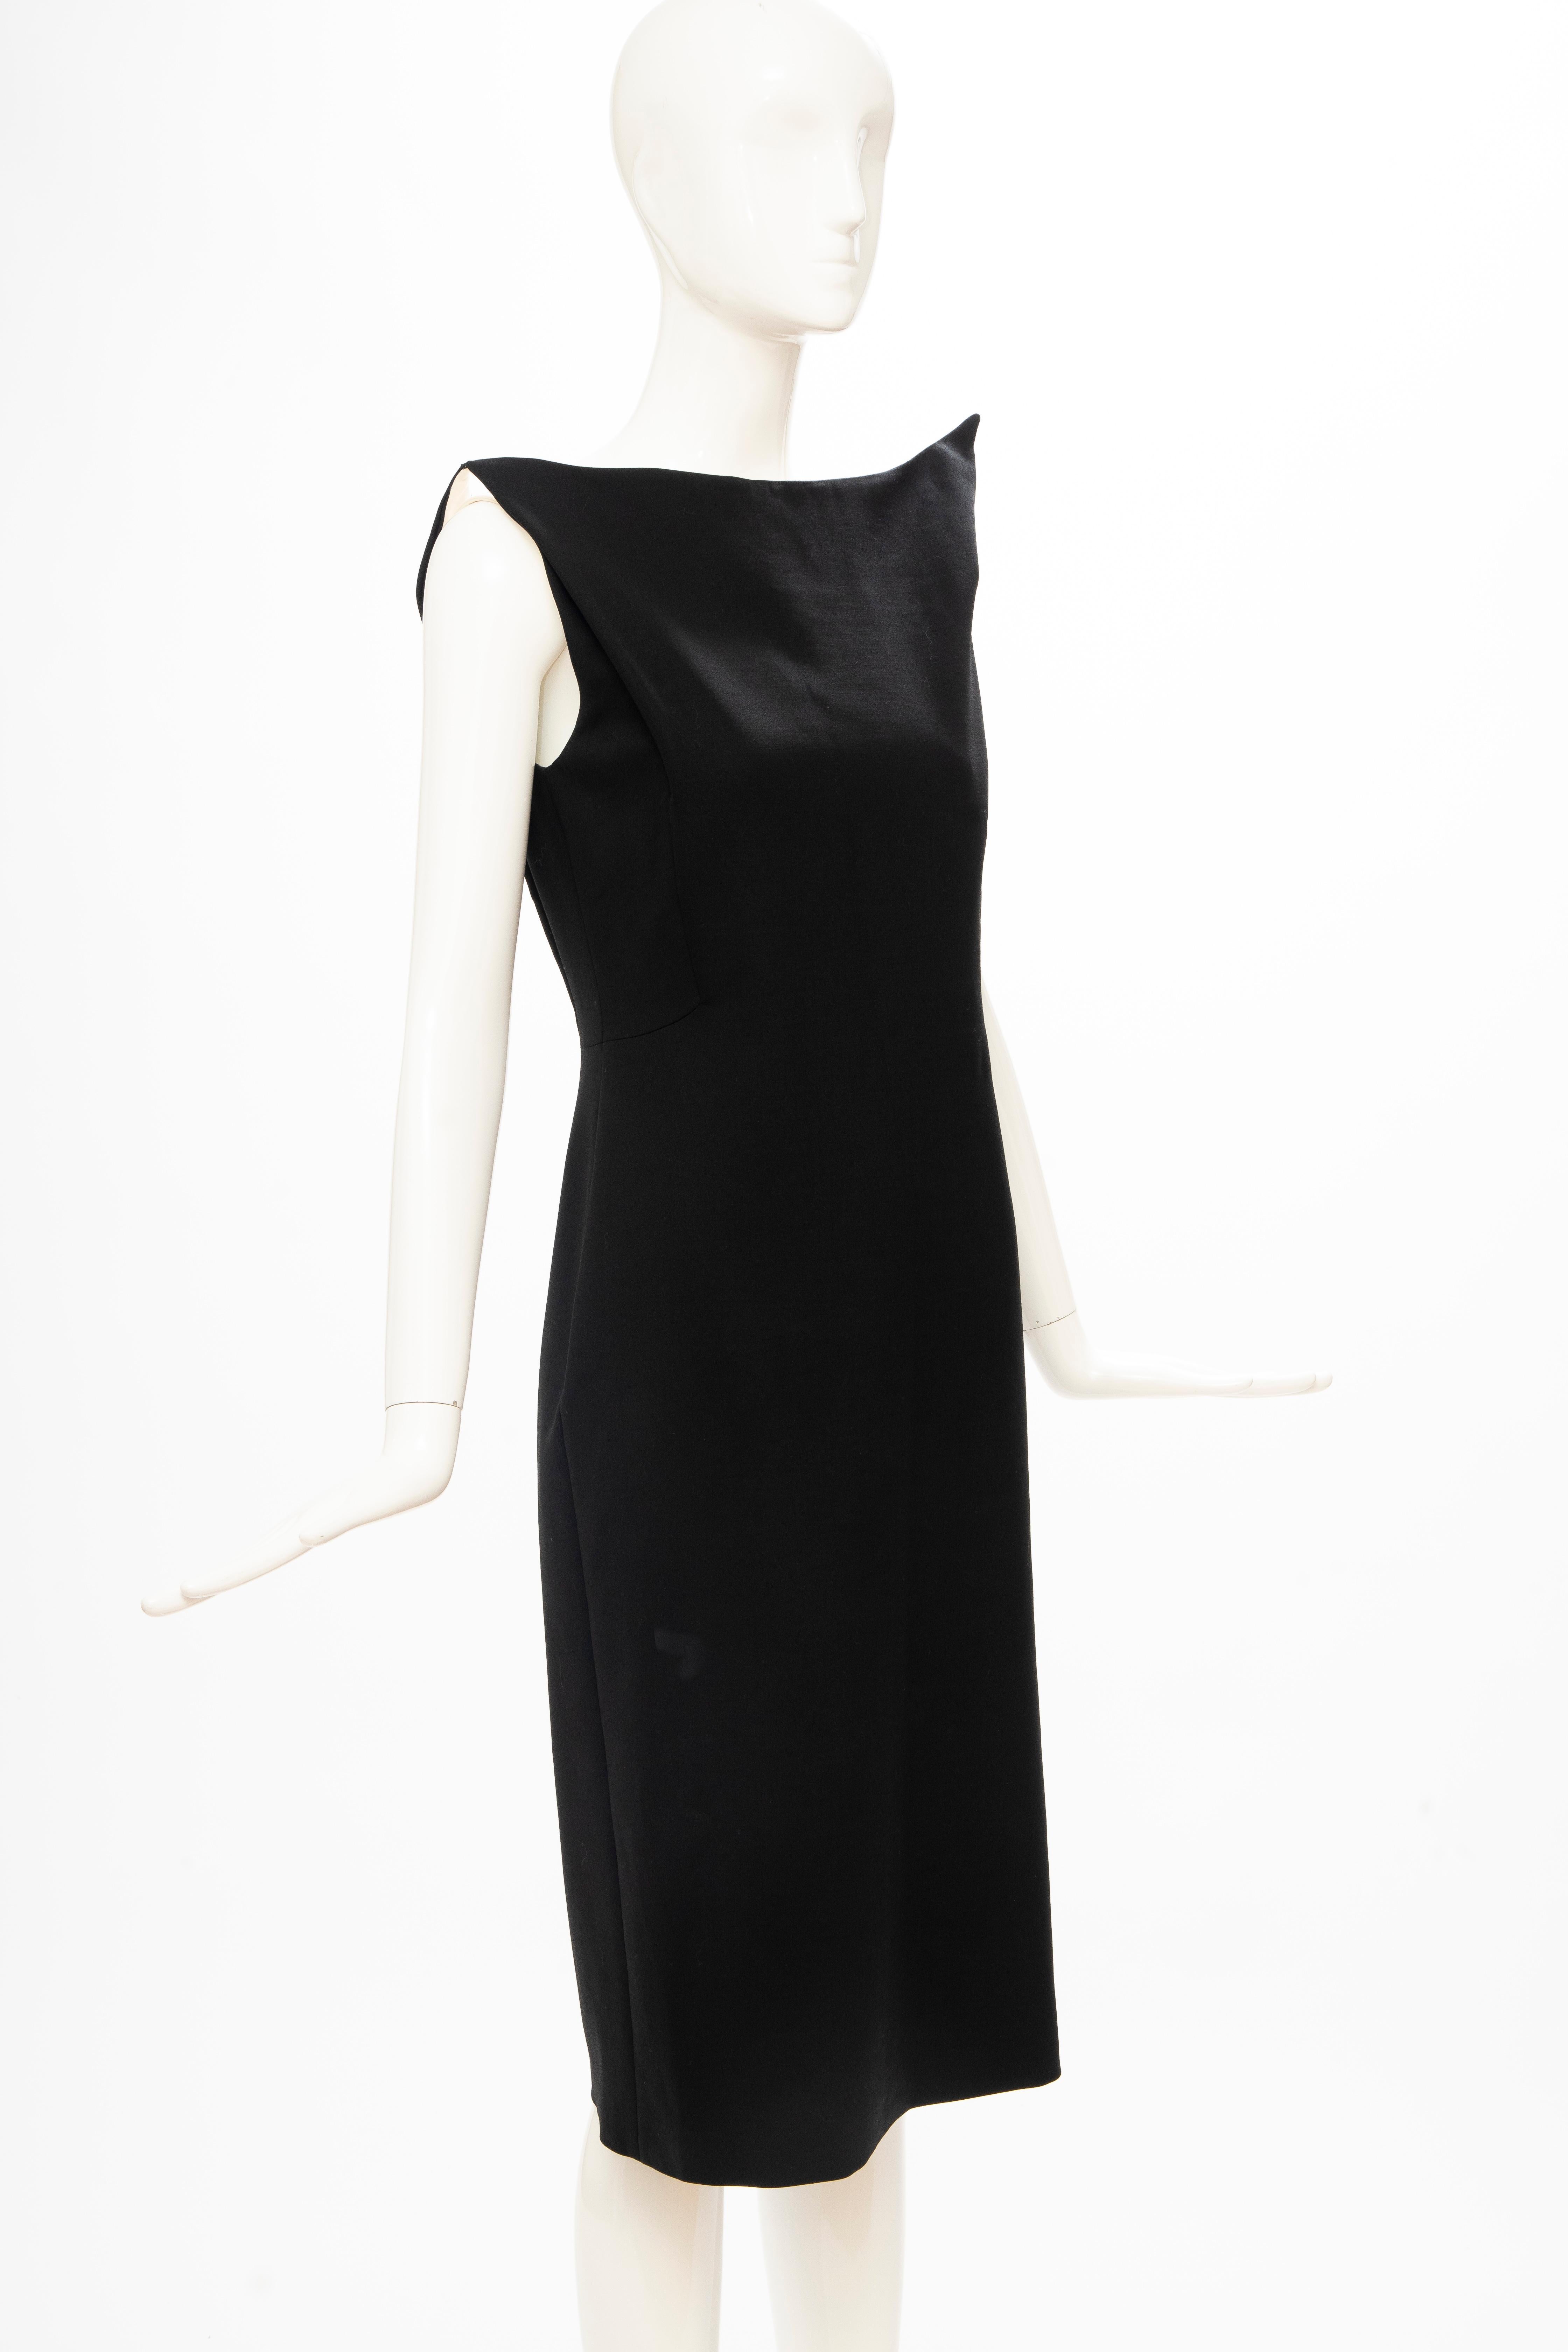 Raf Simons for Jil Sander Runway Black Wool Sculptural Evening Dress, Fall 2009 For Sale 4